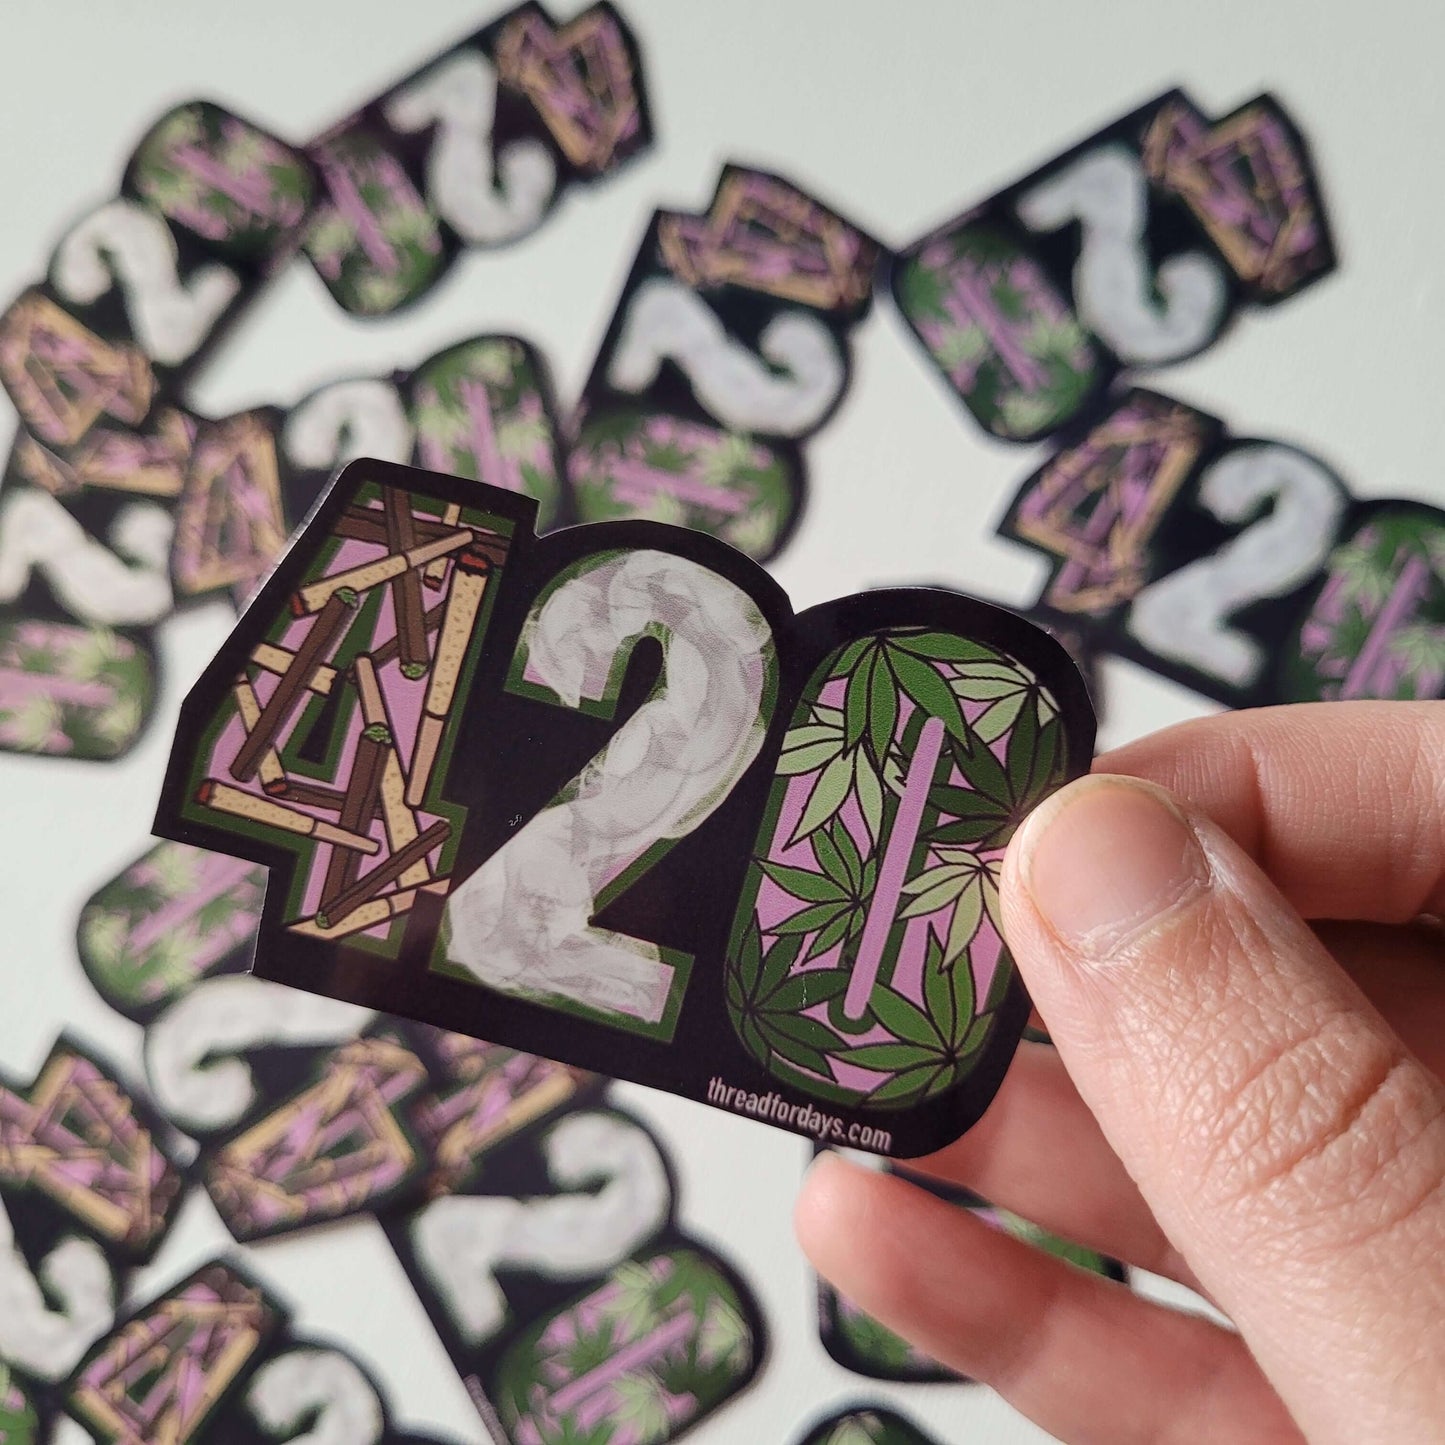 420 sticker held in hand